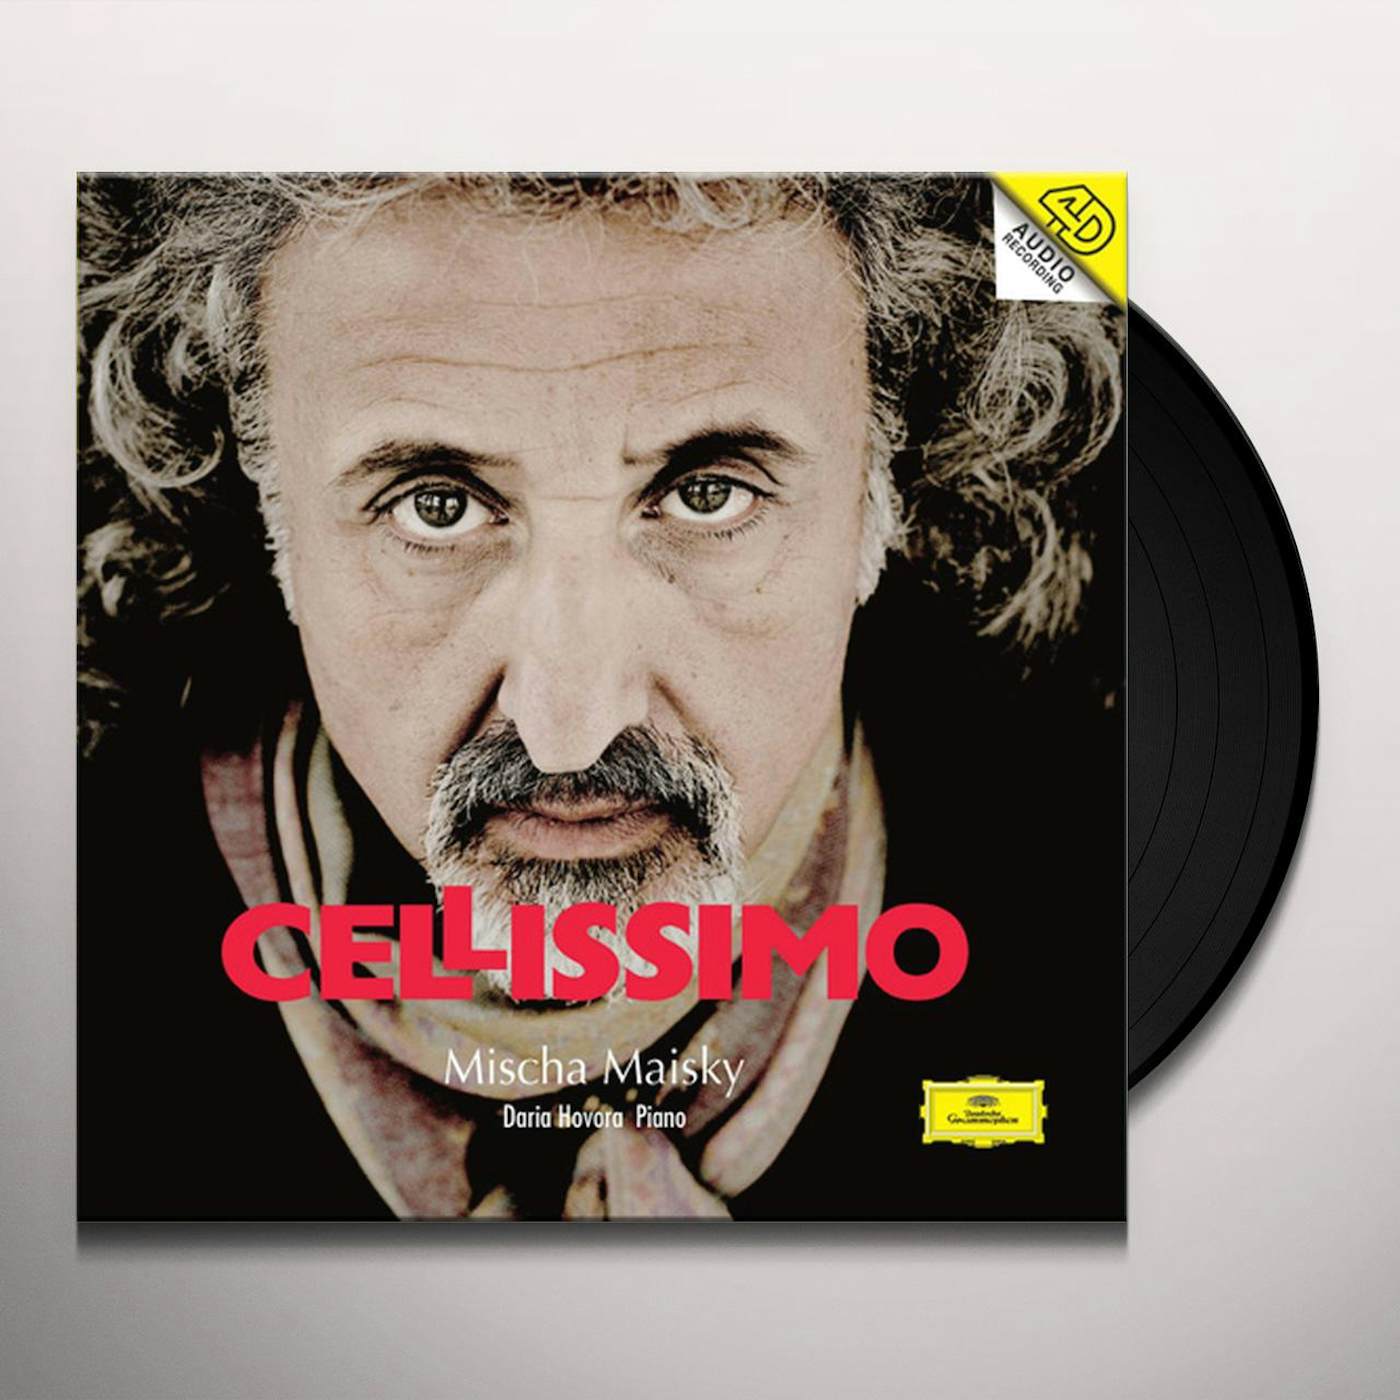 Mischa Maisky Cellissimo Vinyl Record